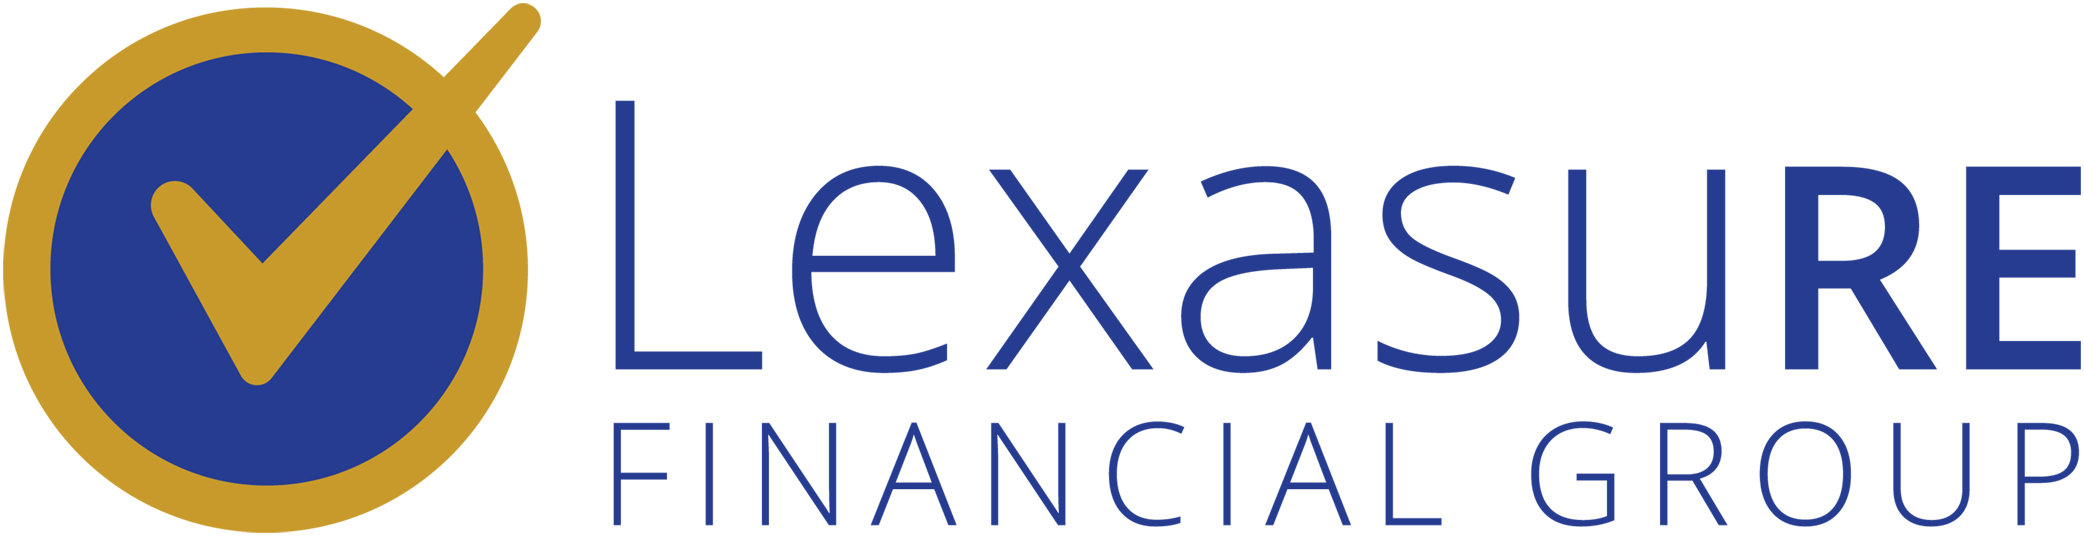 Lexasure Financial Group